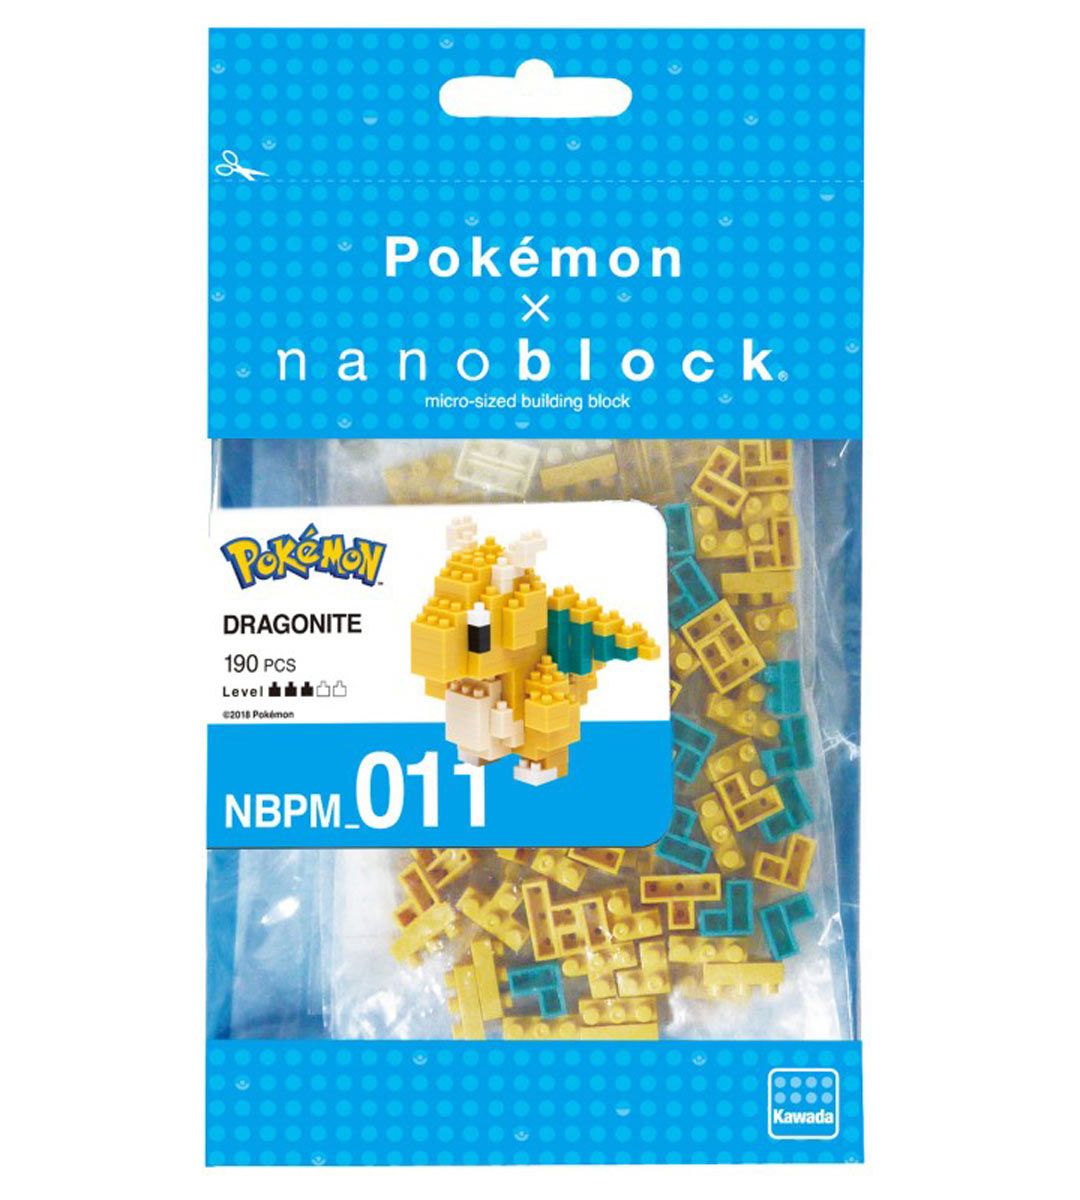 Pokémon x Nanoblock - Dragonite